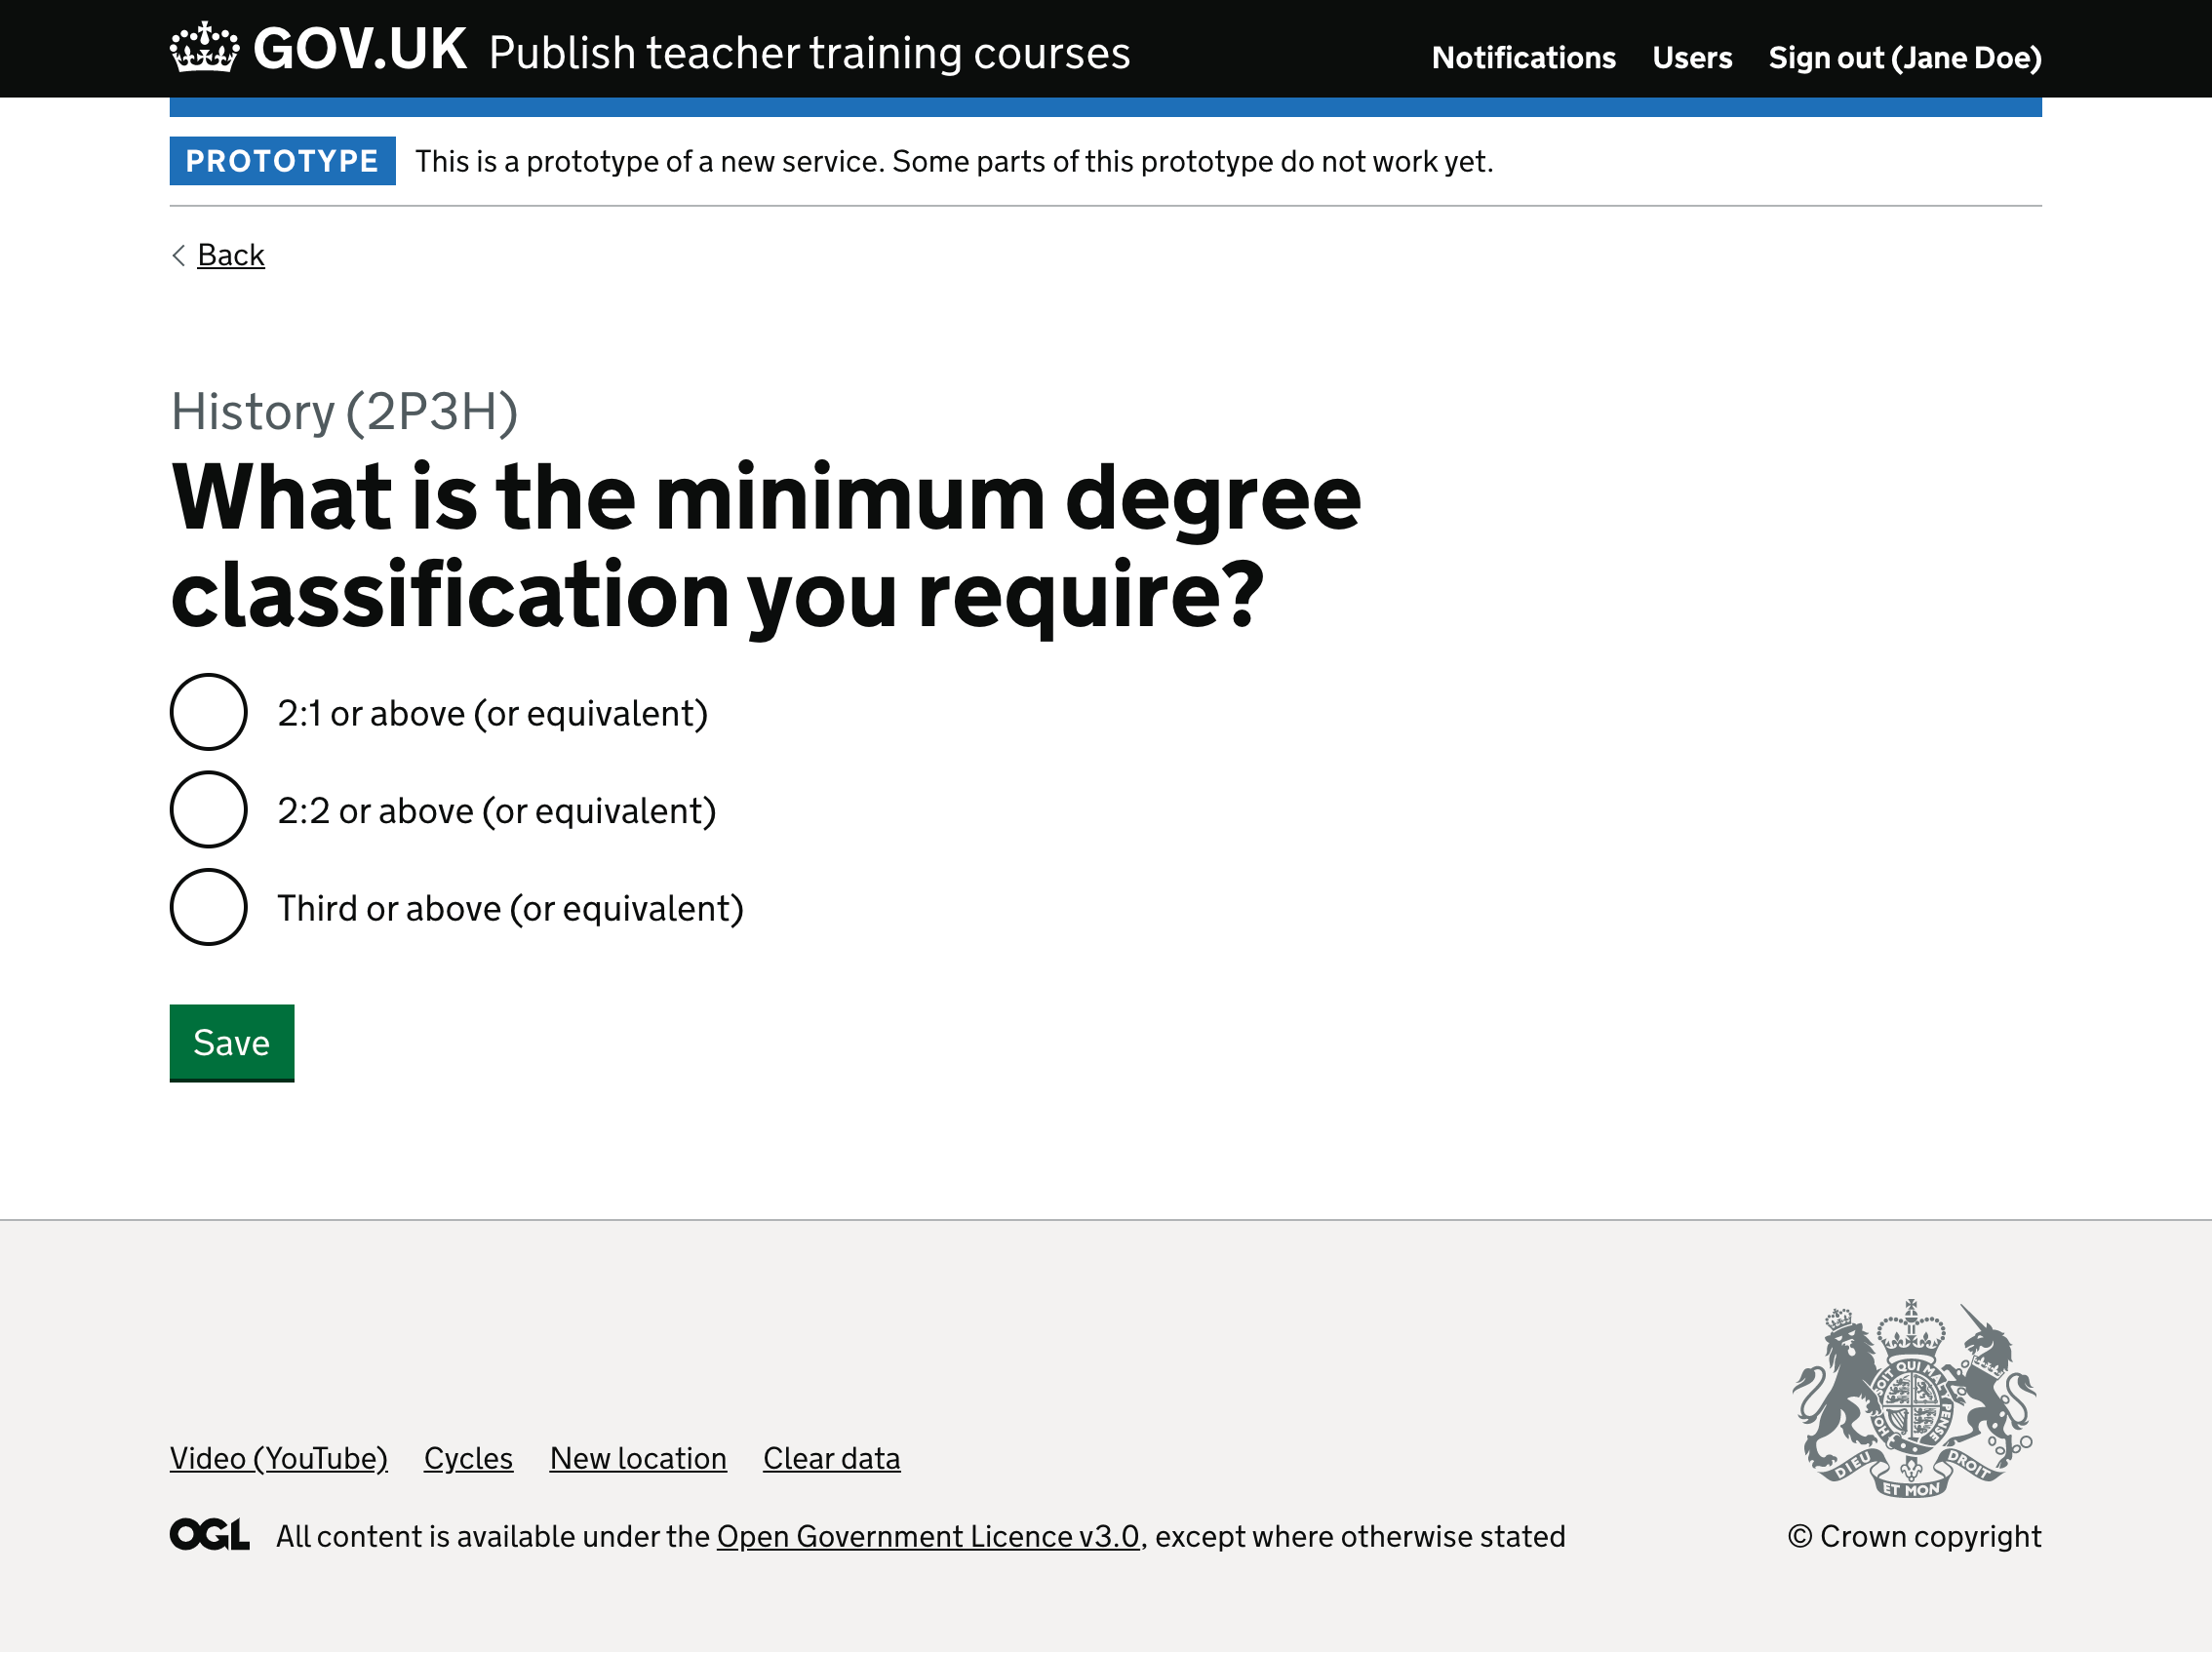 Screenshot of ‘Do you require a minimum degree classification?’ form.